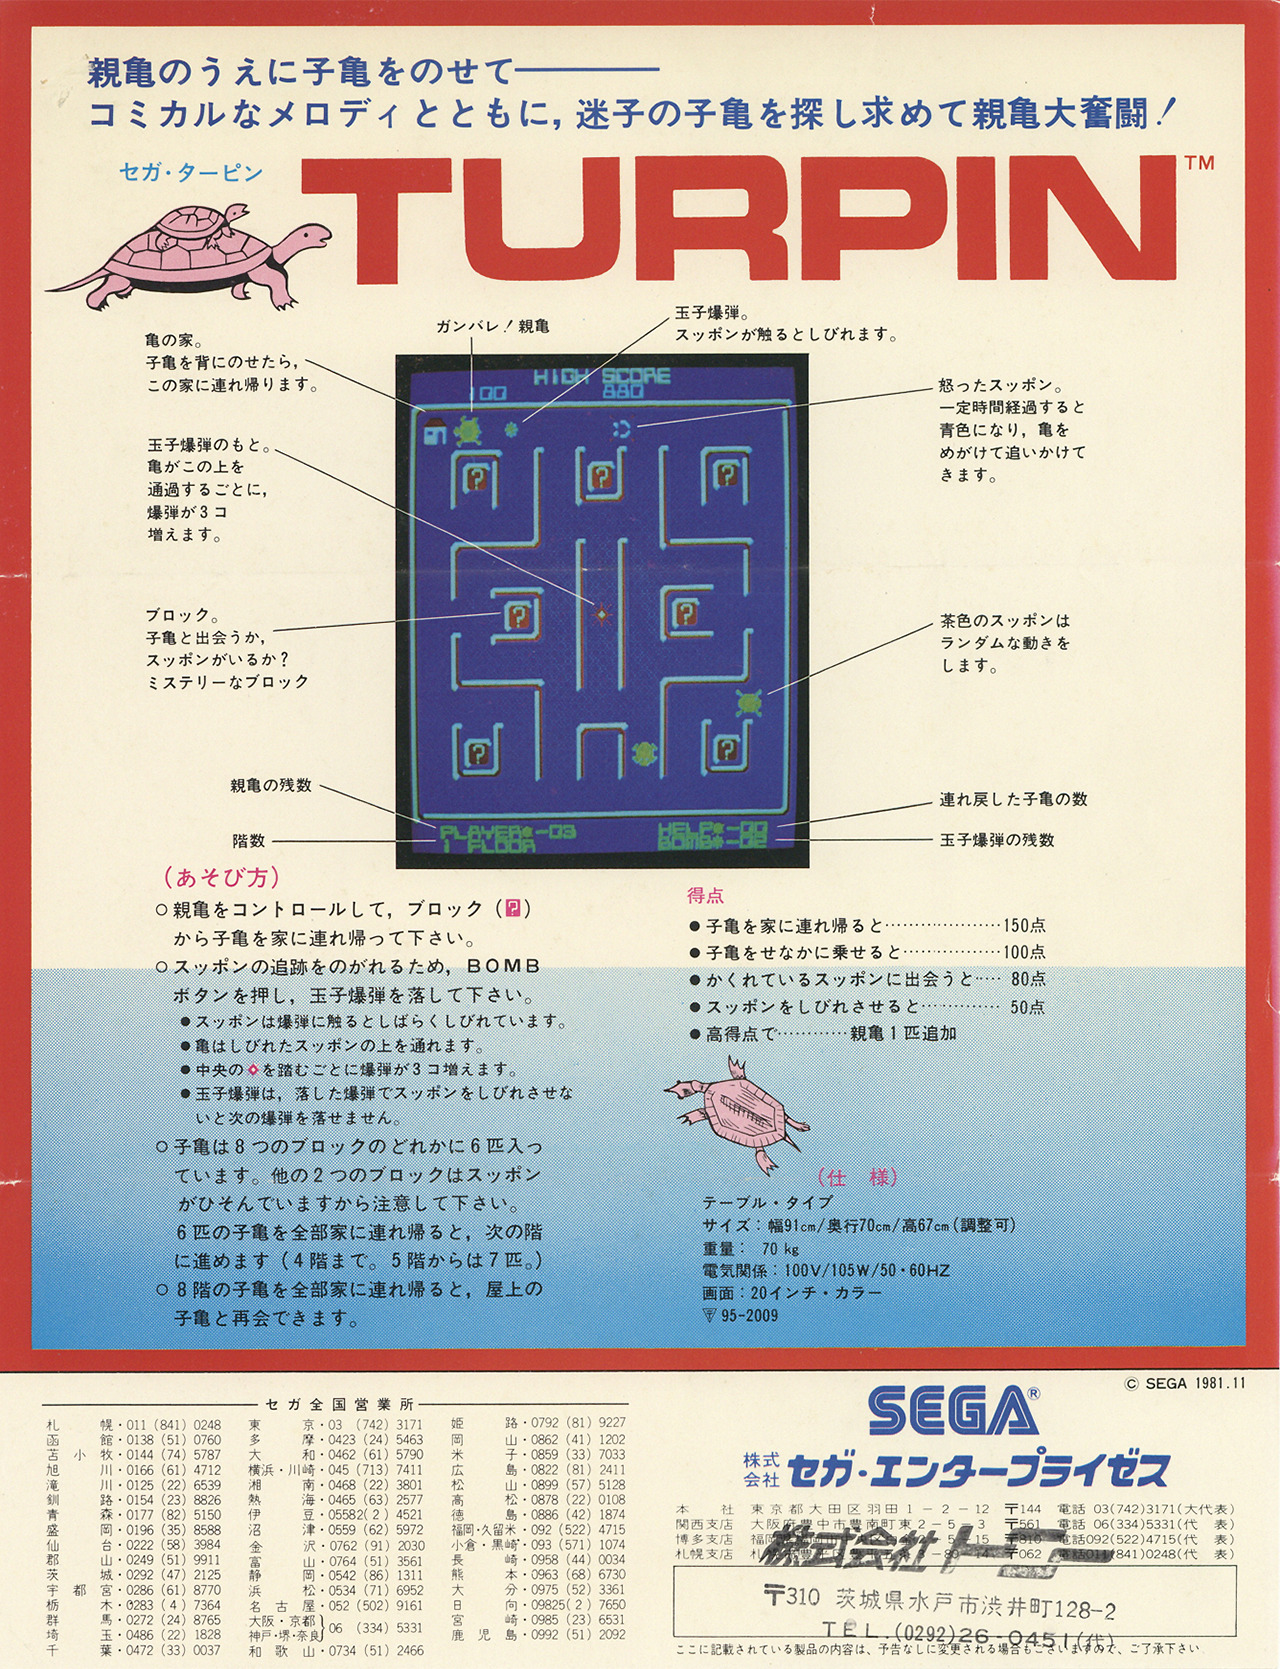 Turpin Arcade JP Flyer.jpg